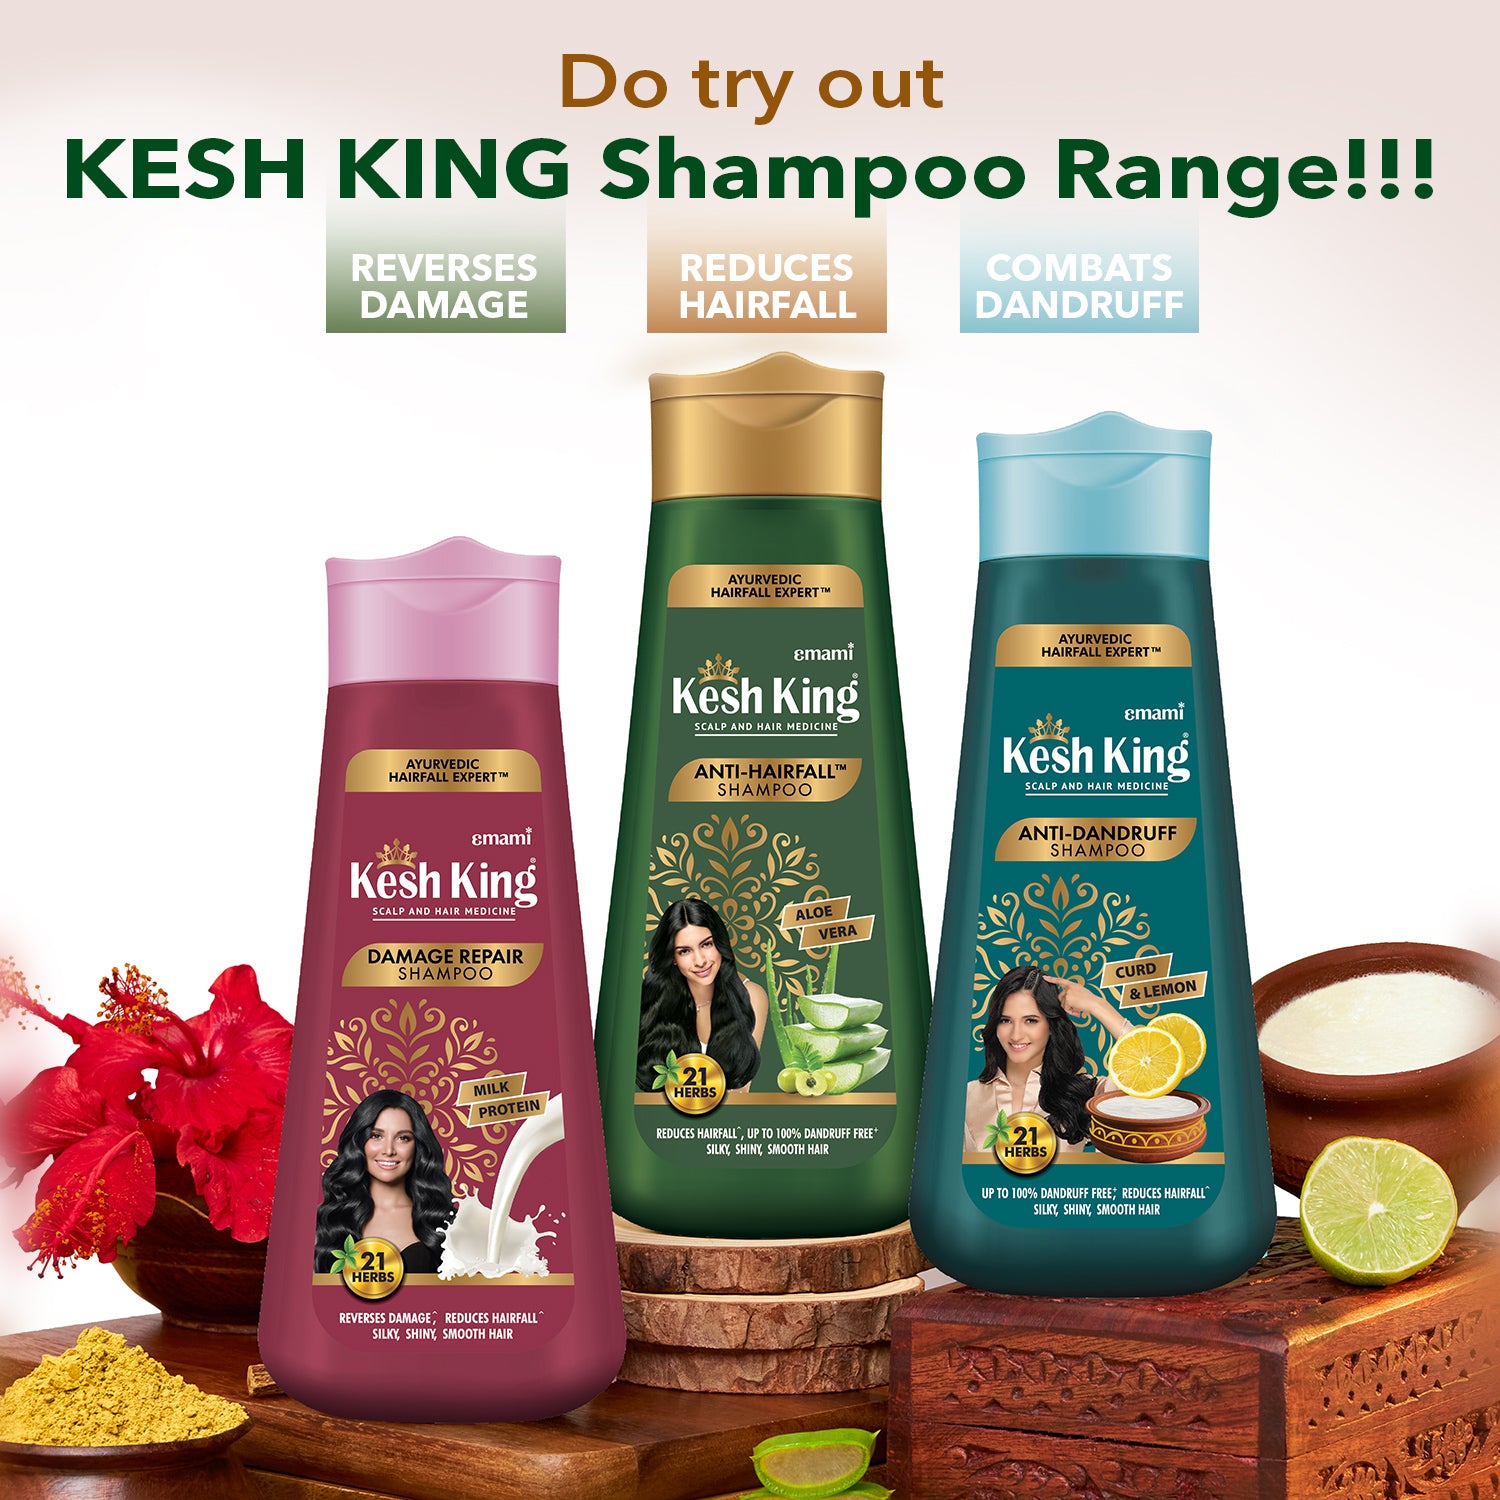 Kesh King Ayurvedic Damage Repair Shampoo 200ml